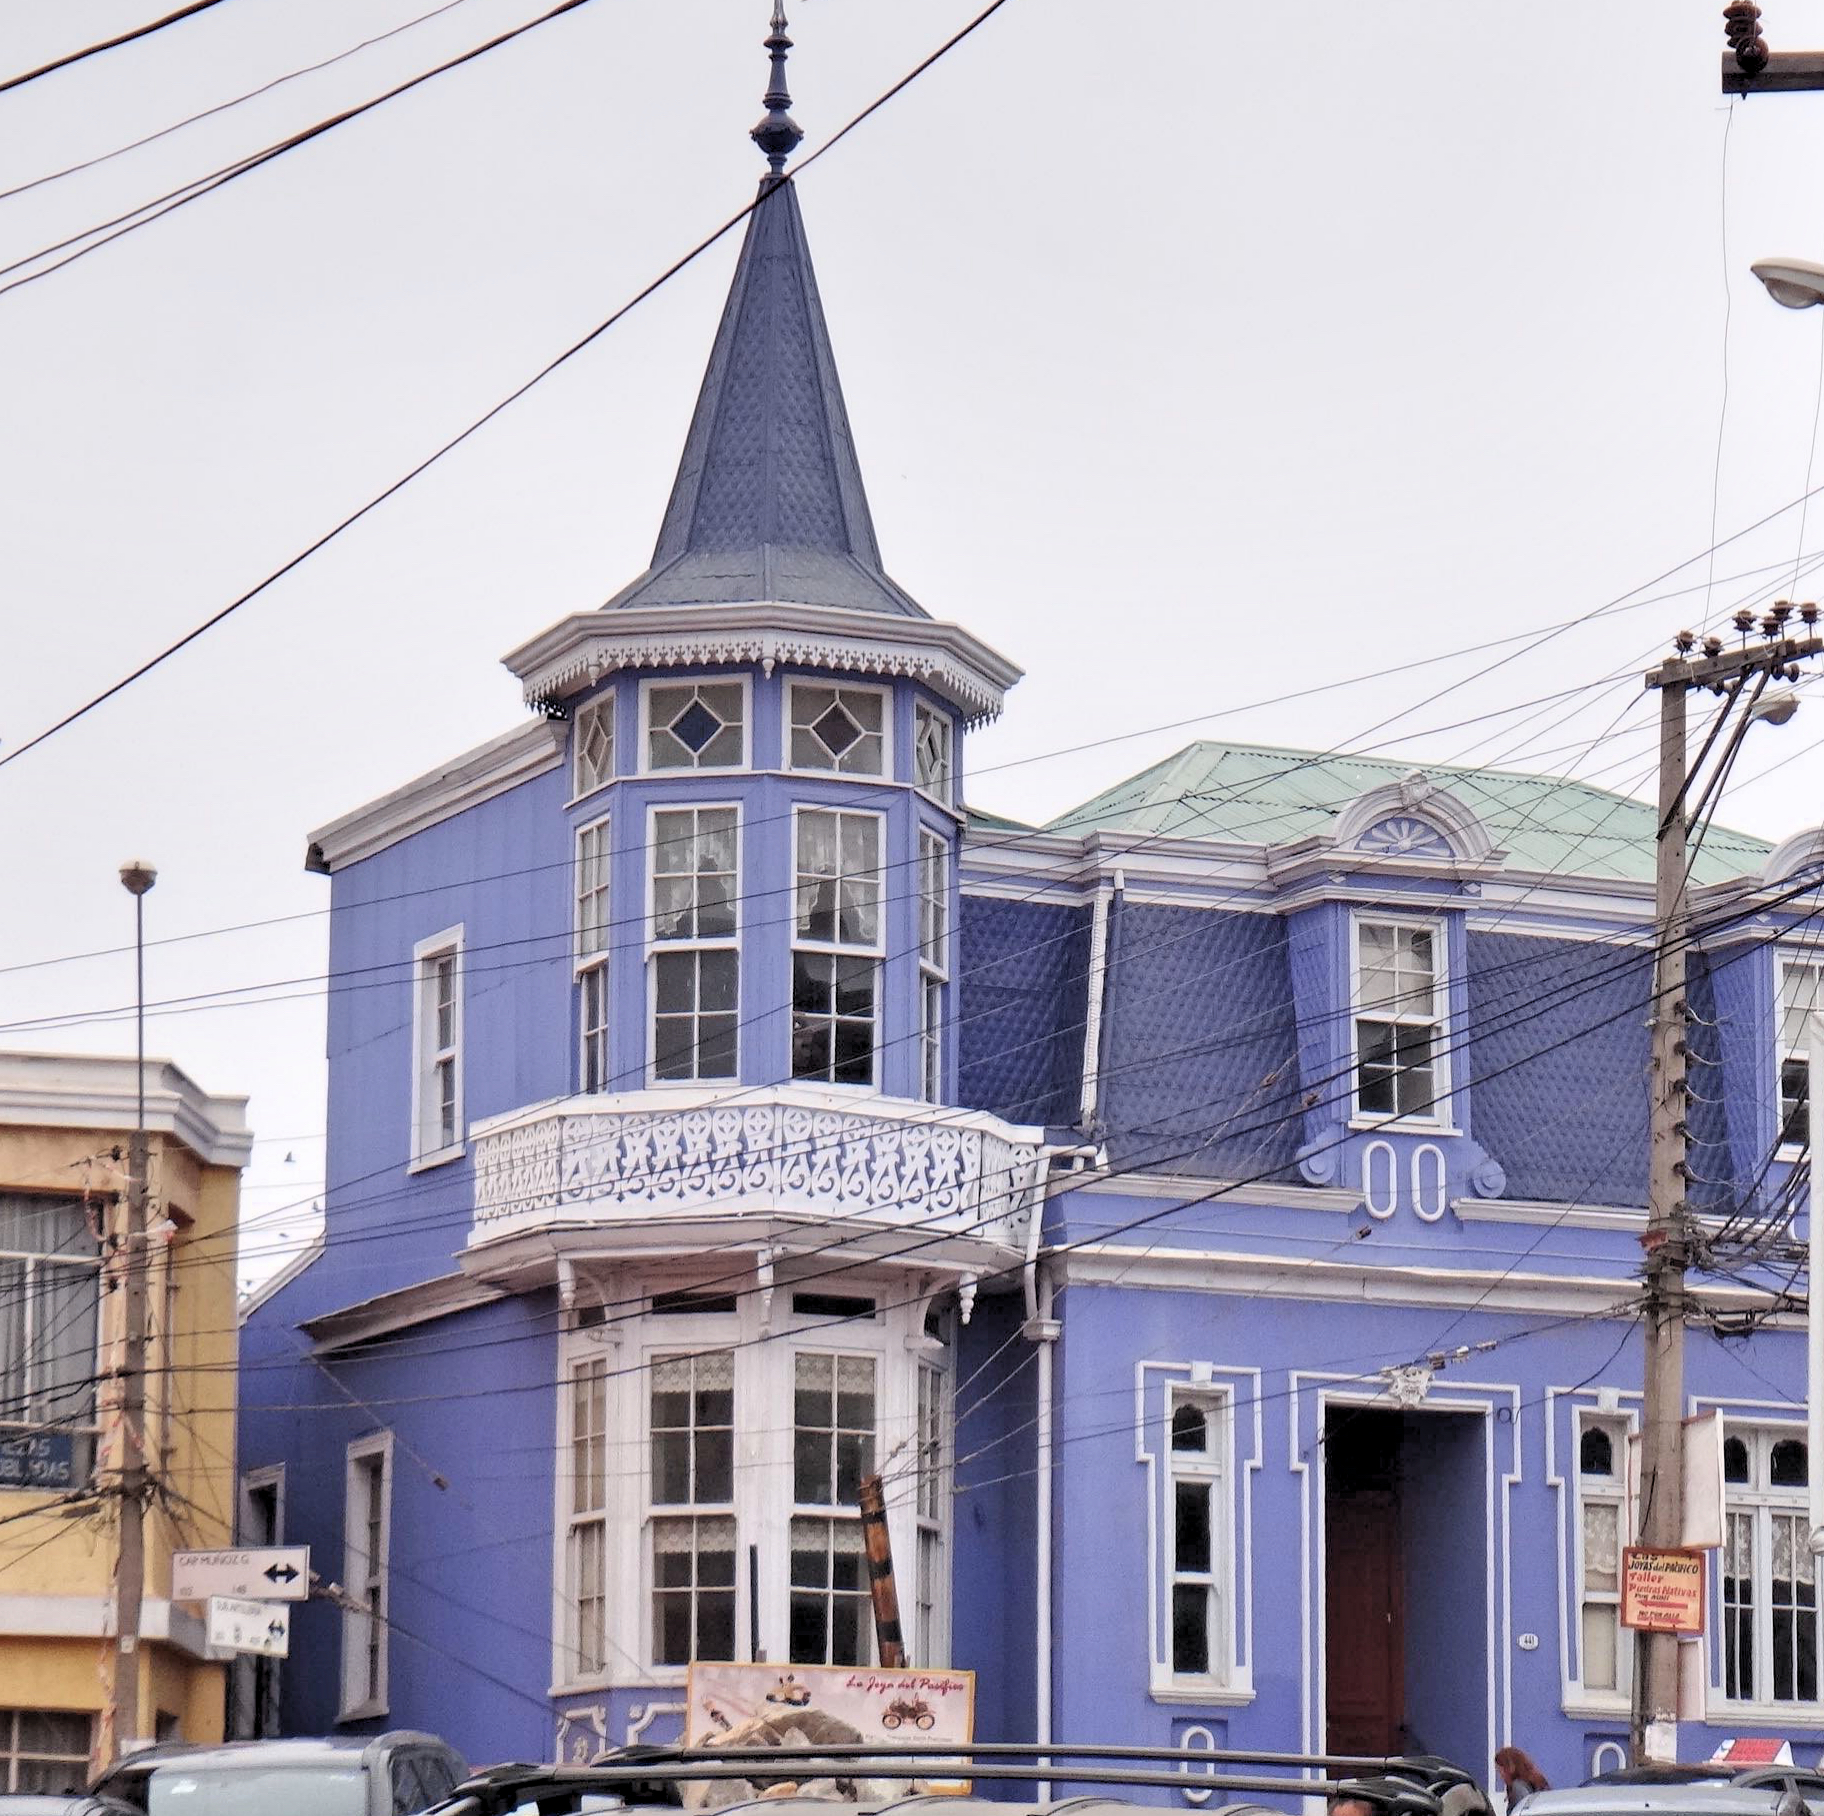 Valparaiso e suas casas coloridas